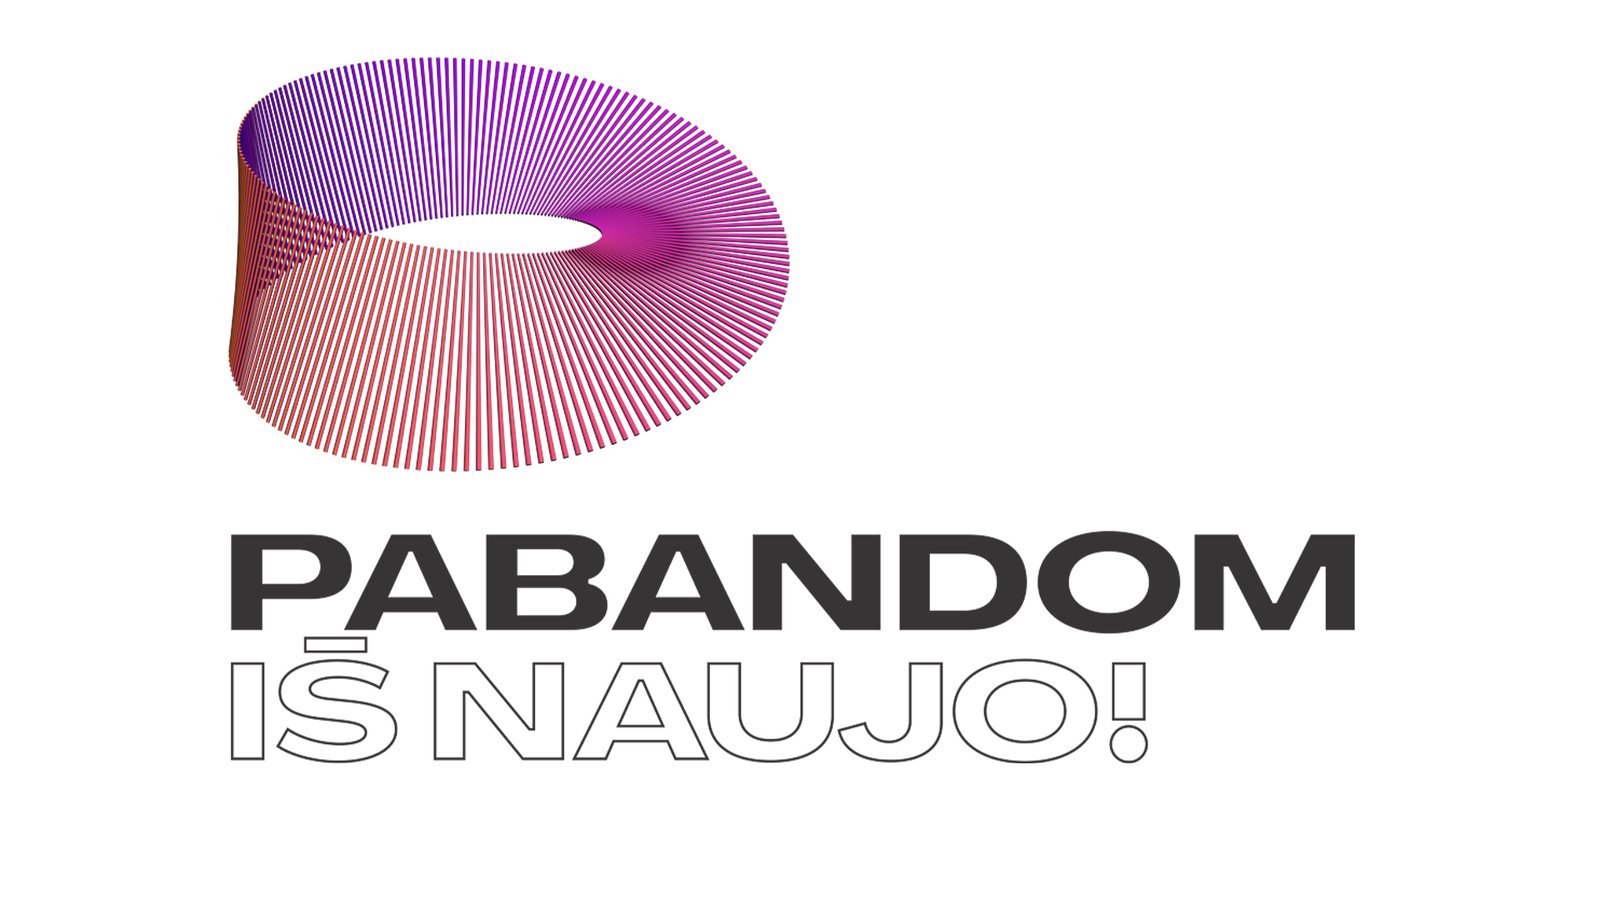 logo pabandom is naujo émisision de sélection nationale Lituanie